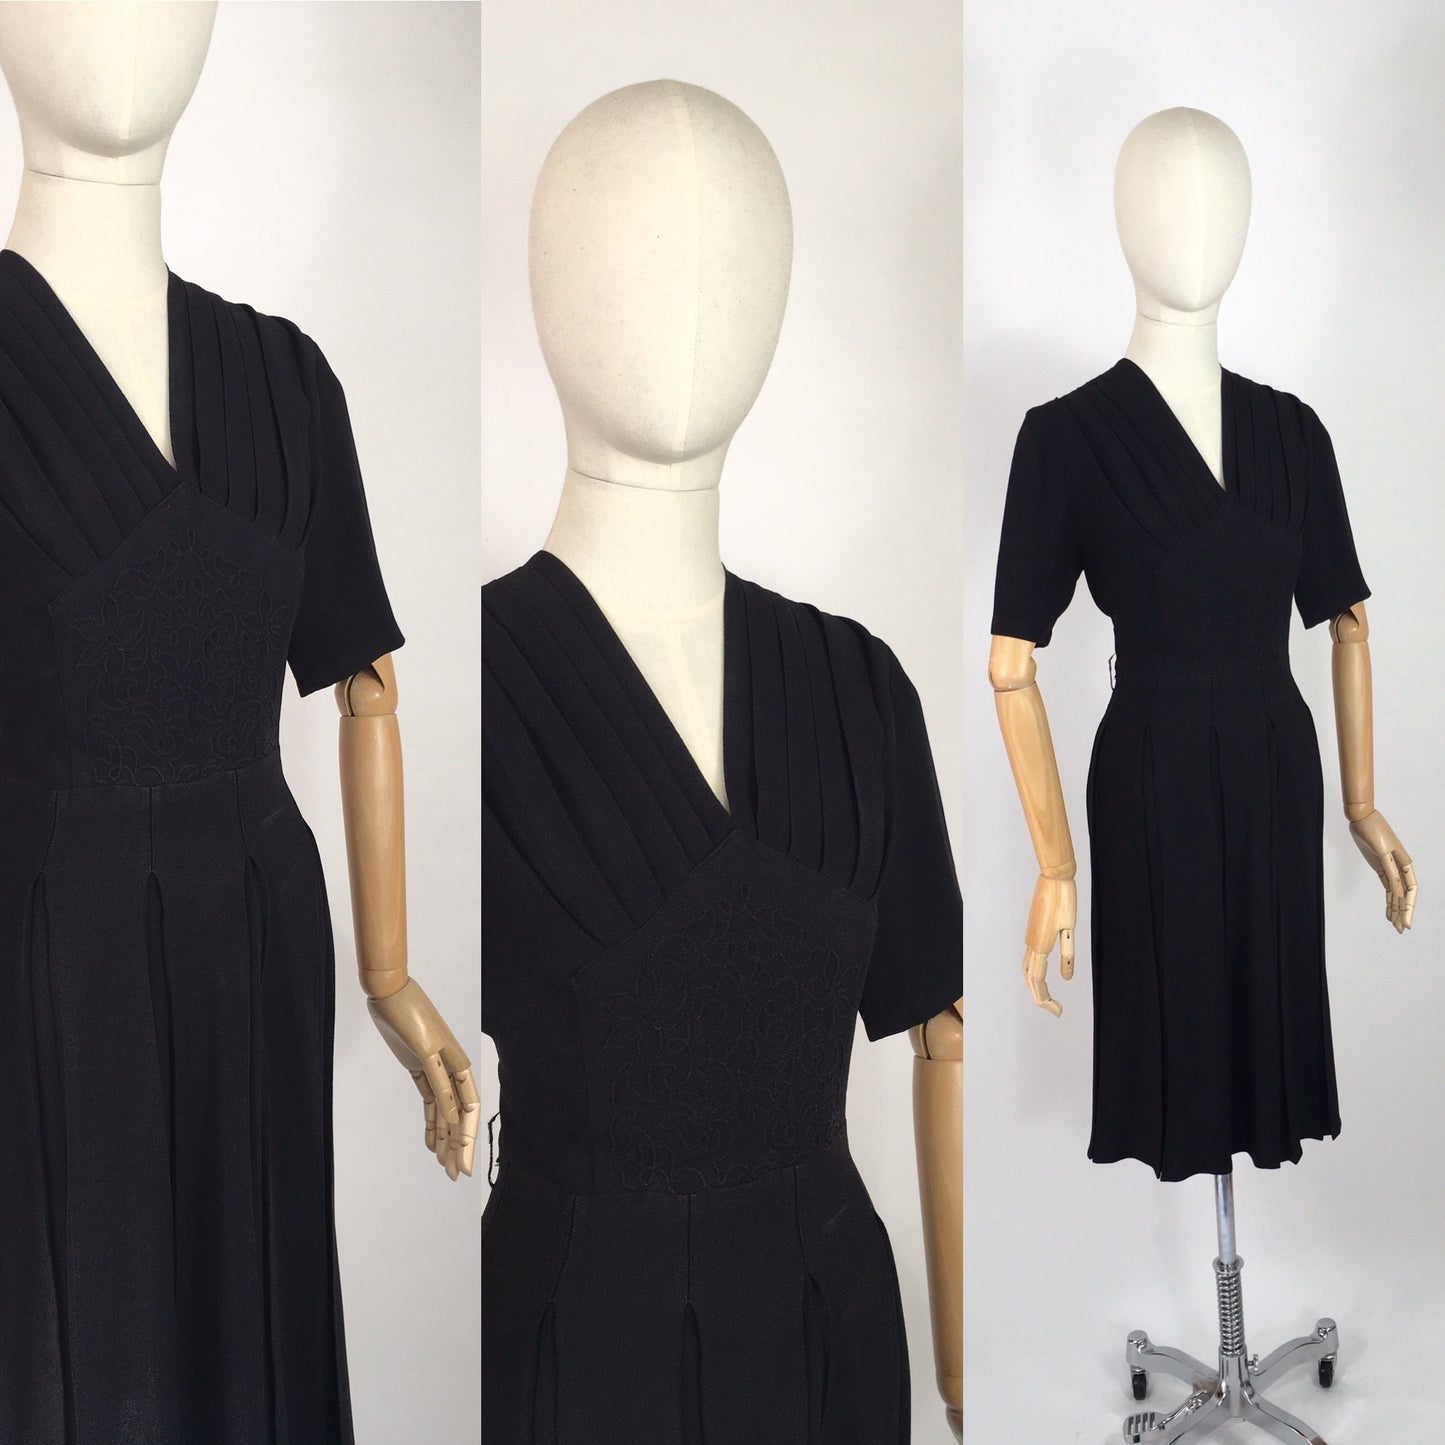 Original 1940’s Black Crepe Dress - With a Lovely Soutache Waist Panel Detailing